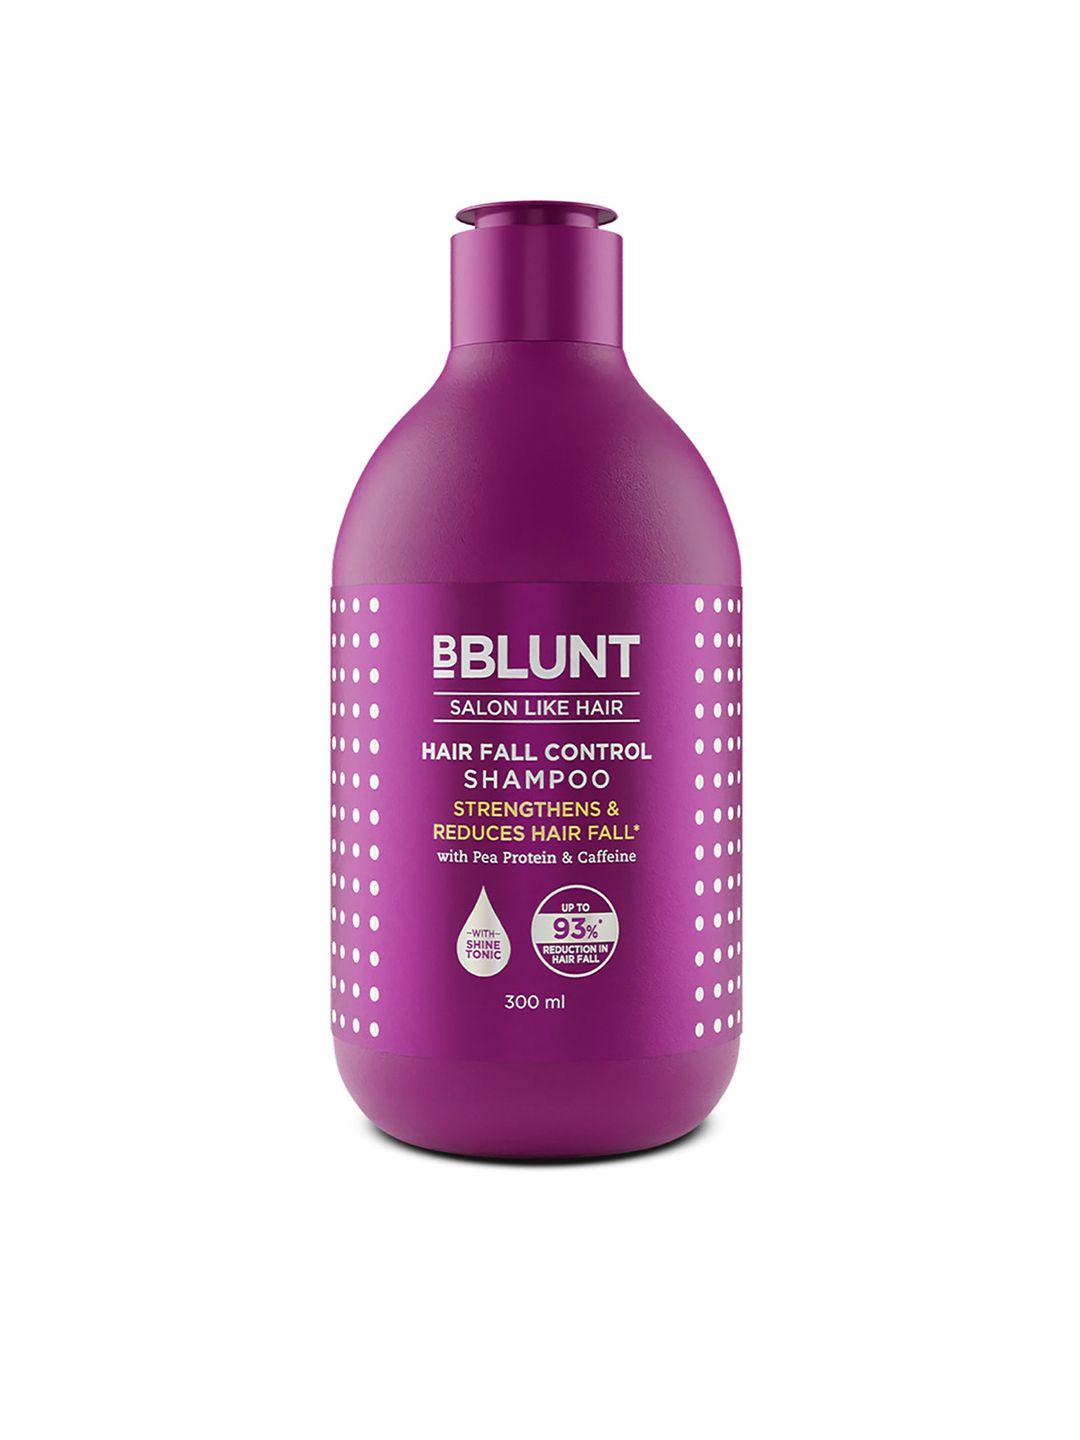 bblunt hair fall control shampoo with pea protein & caffeine - 300 ml